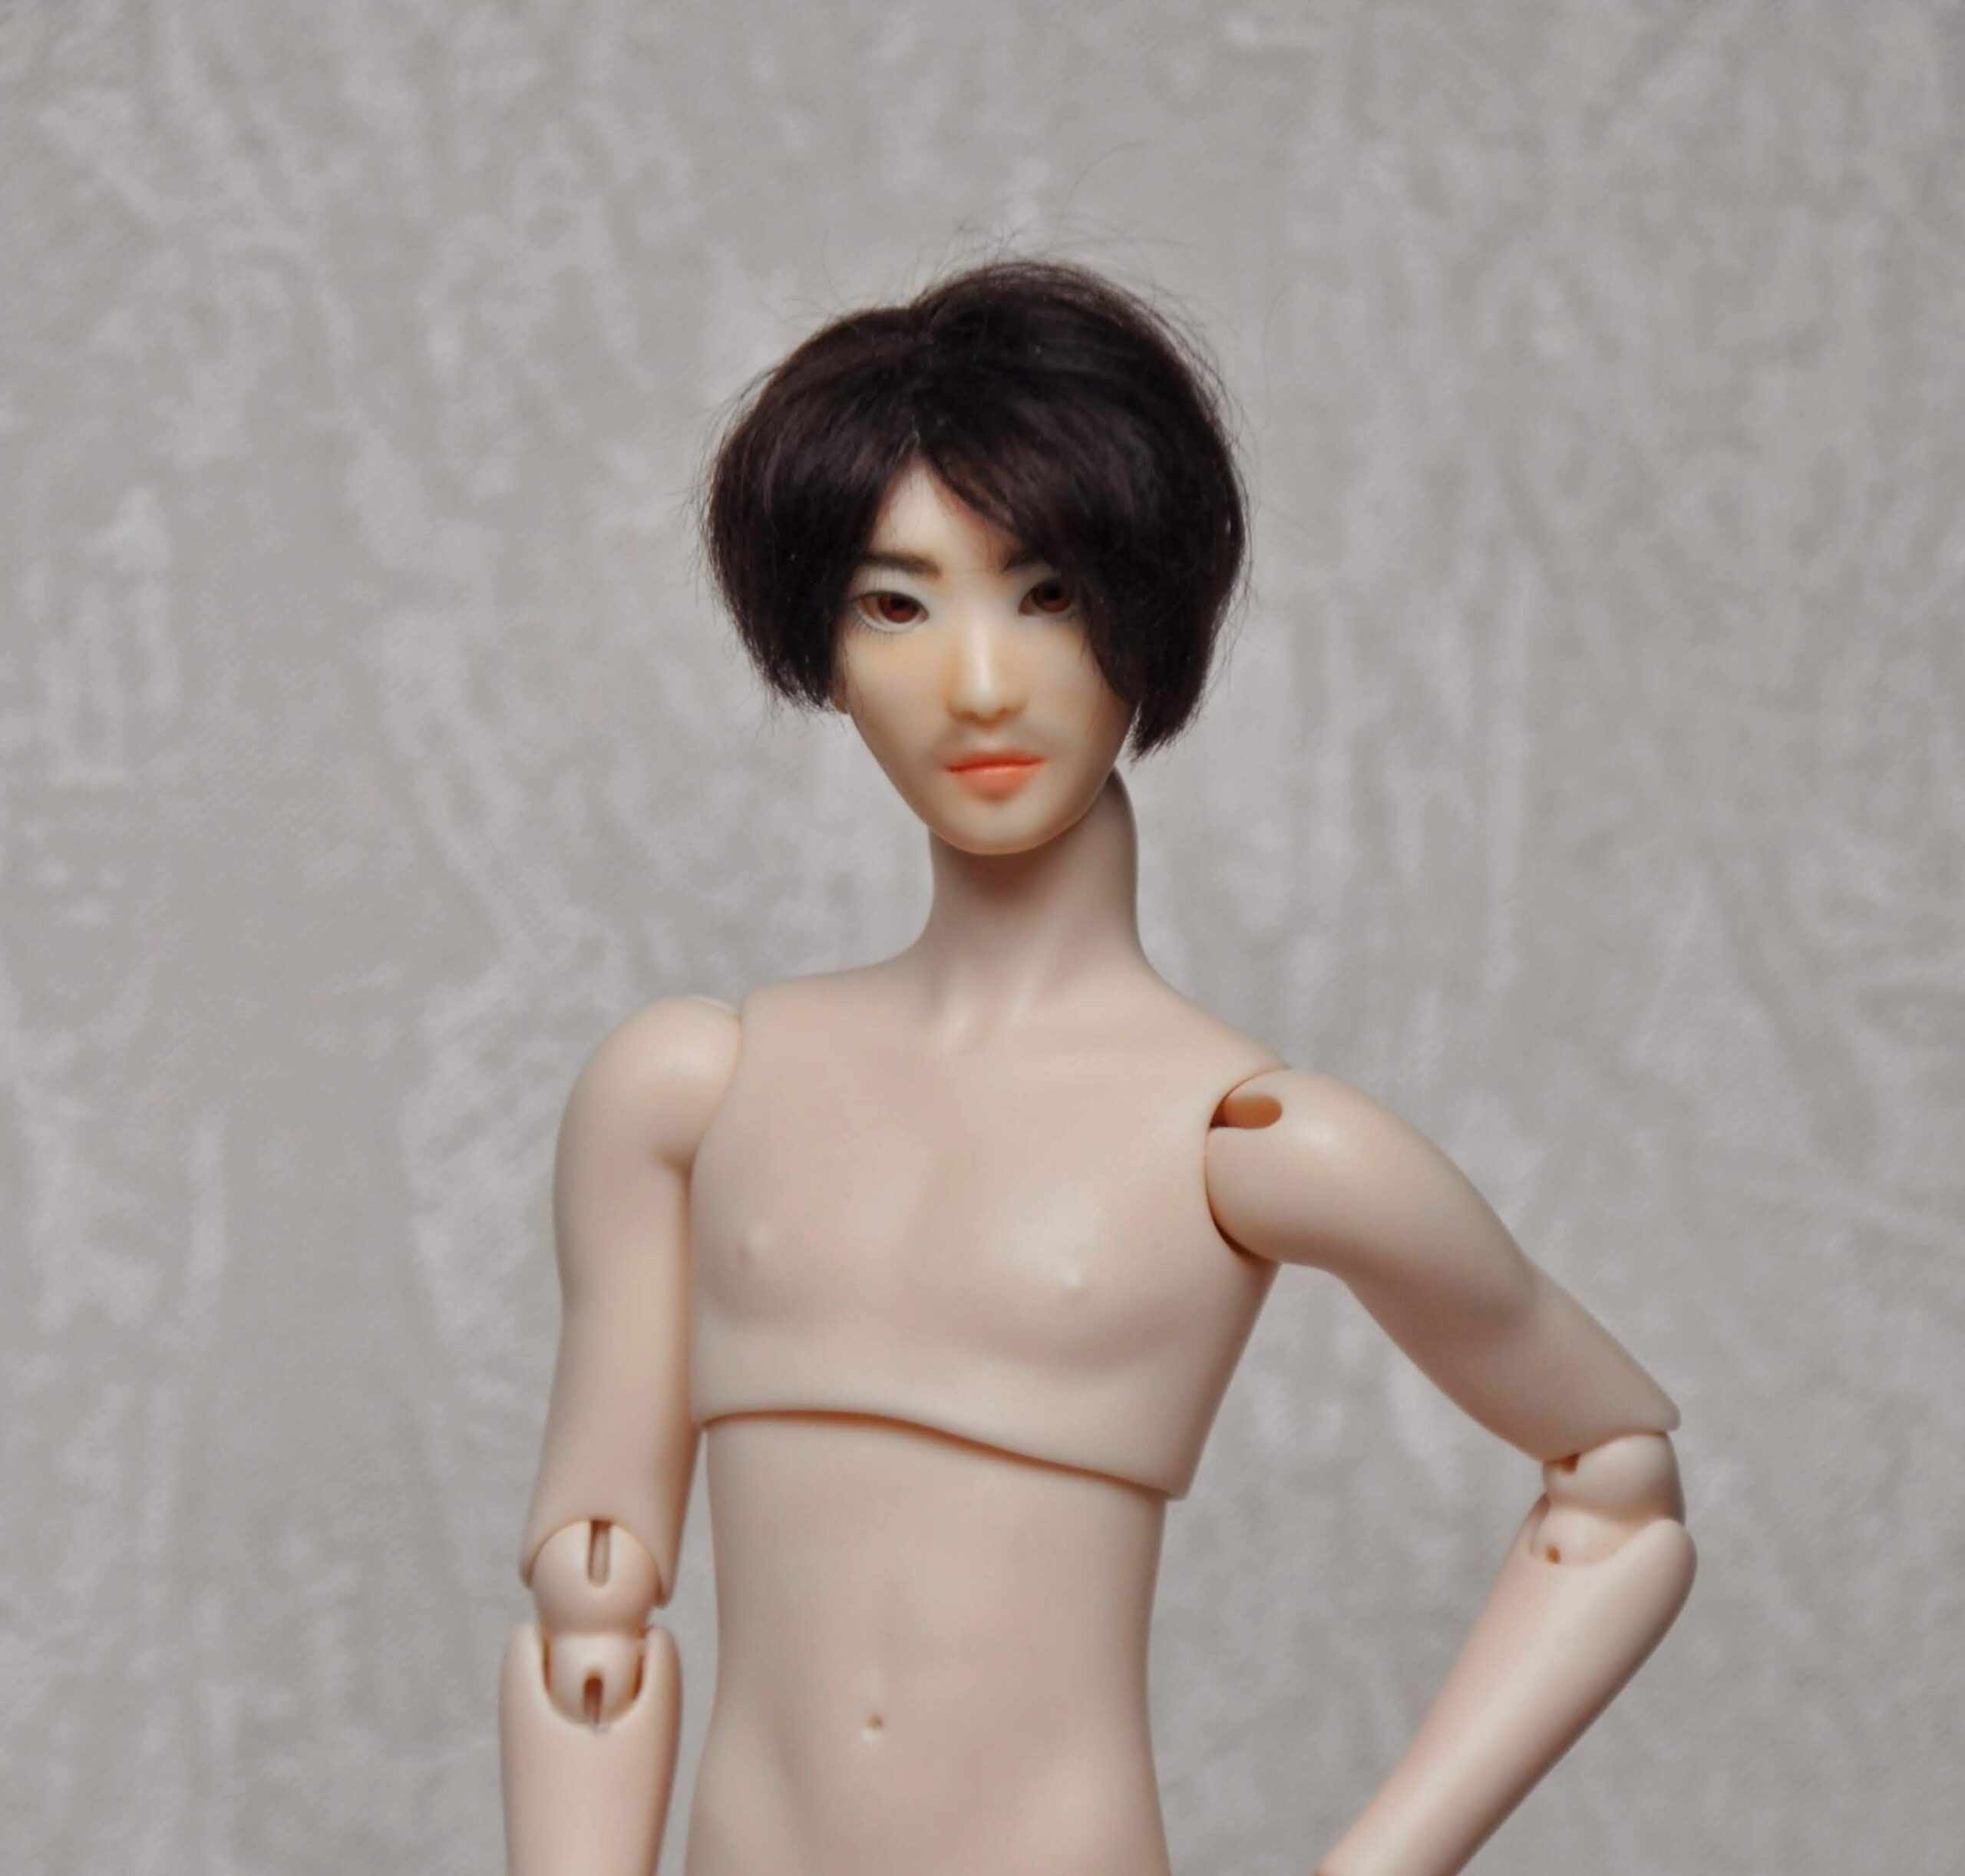 Bjd Male Doll Porn - Nude resin boy balljointed doll. BJD male doll Joon - DailyDoll Shop